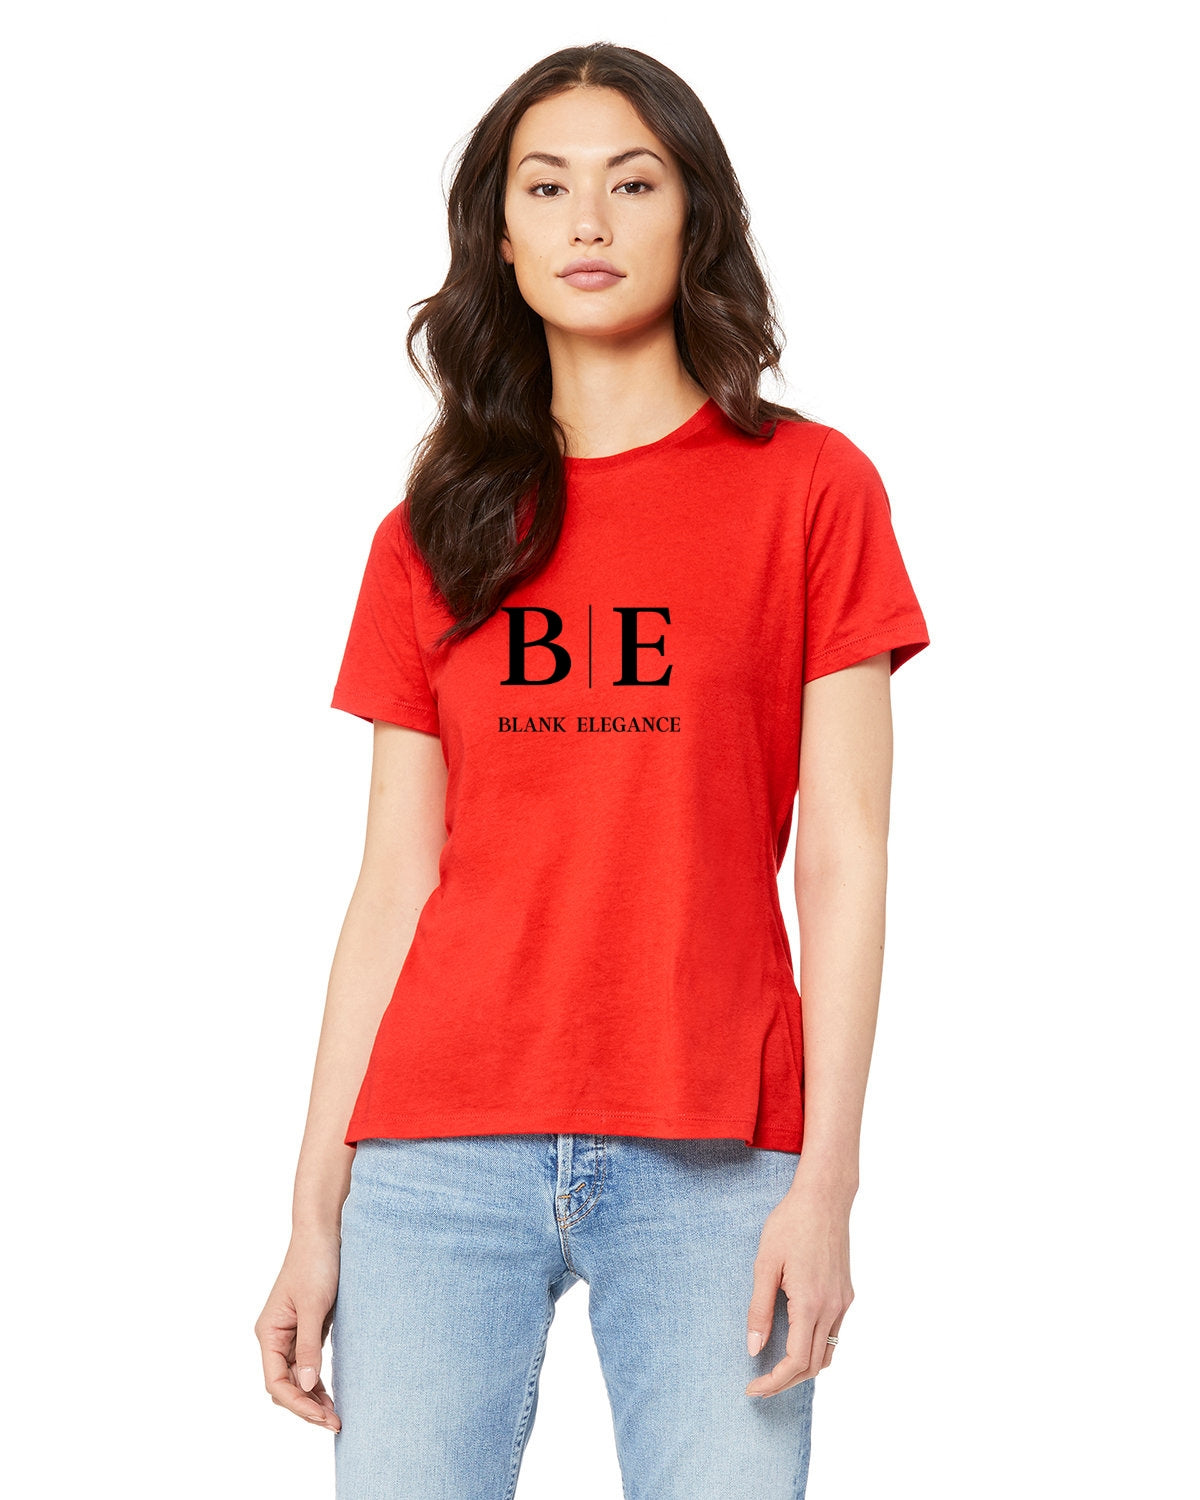 Elegance & Comfort Women's T-Shirt